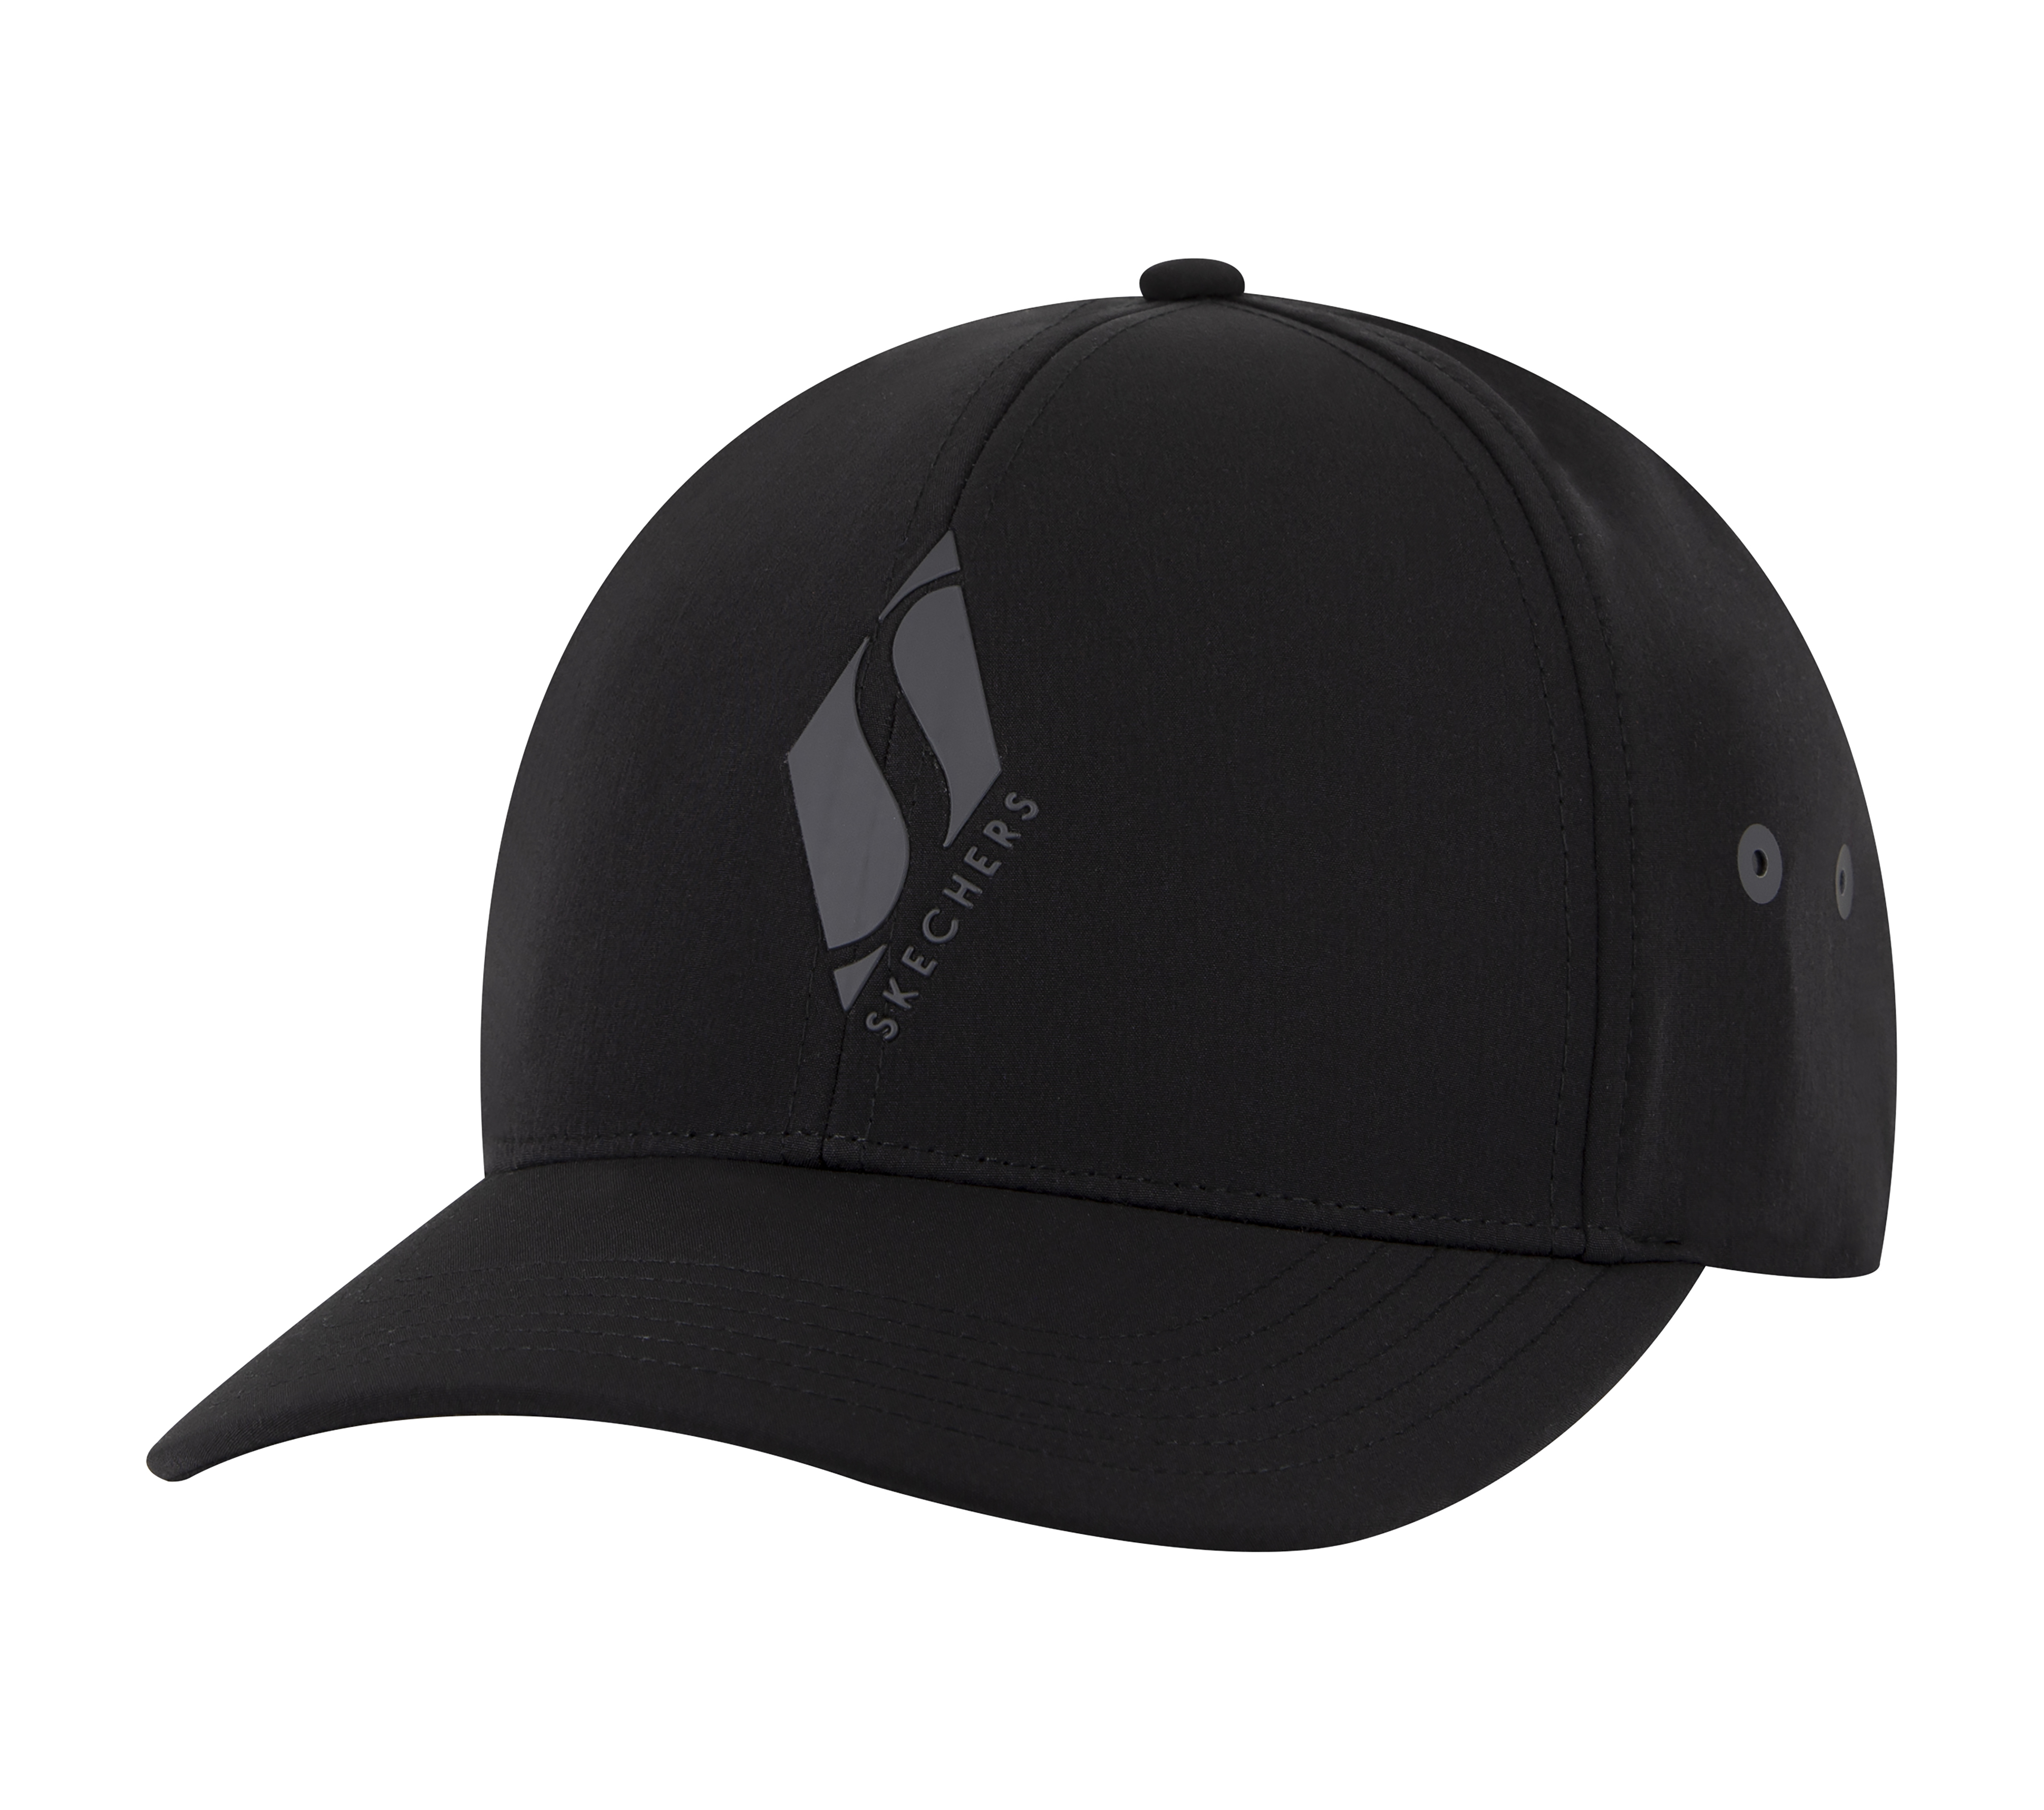 Skechers Men's Accessories - Diamond S Hat Black Polyester/Spandex